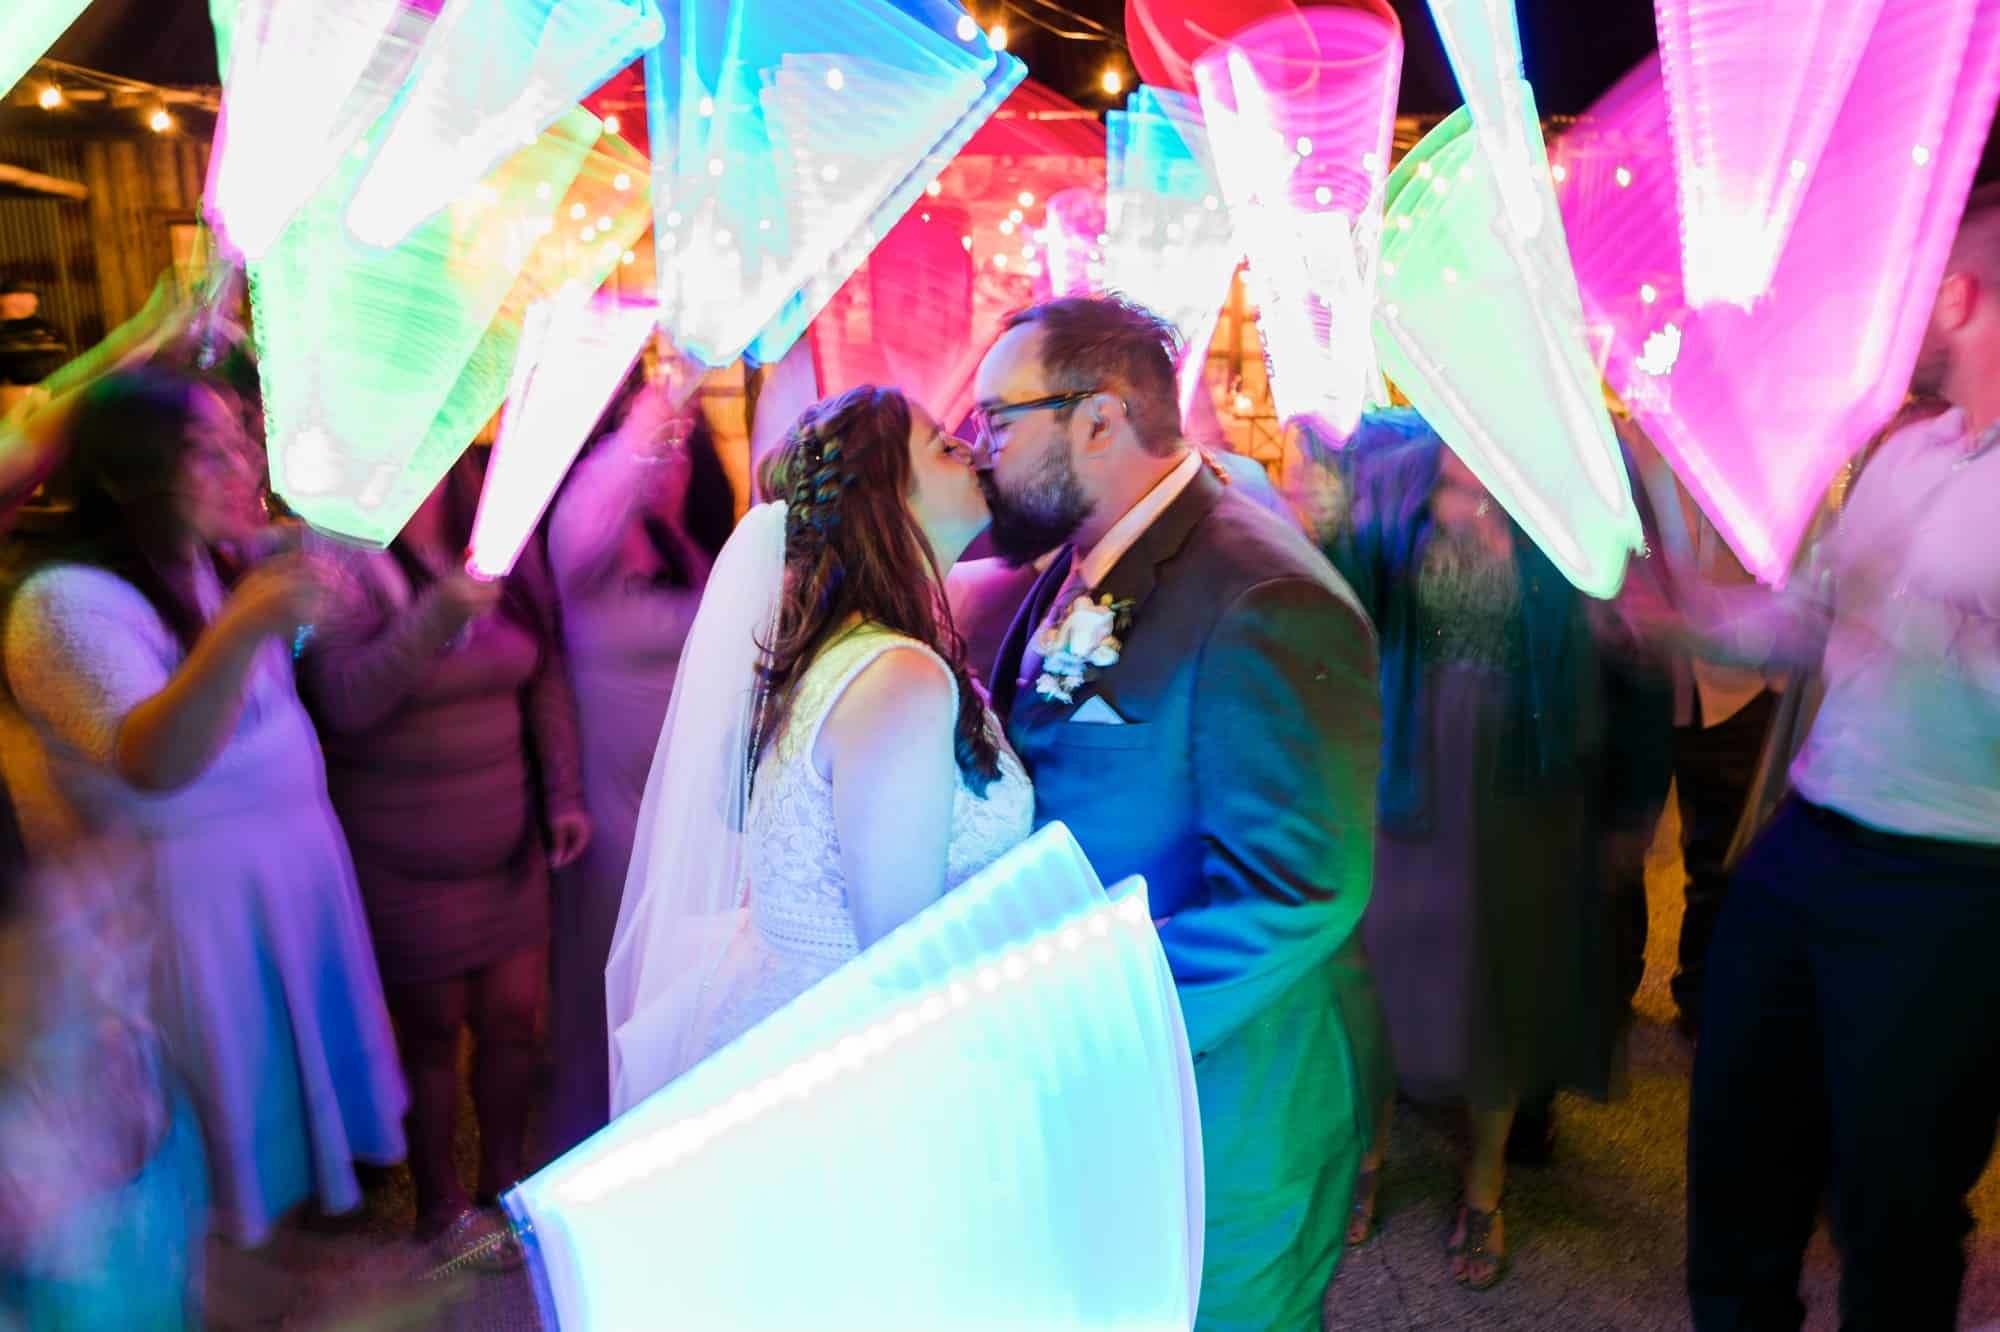 lightsaber wedding reception send off